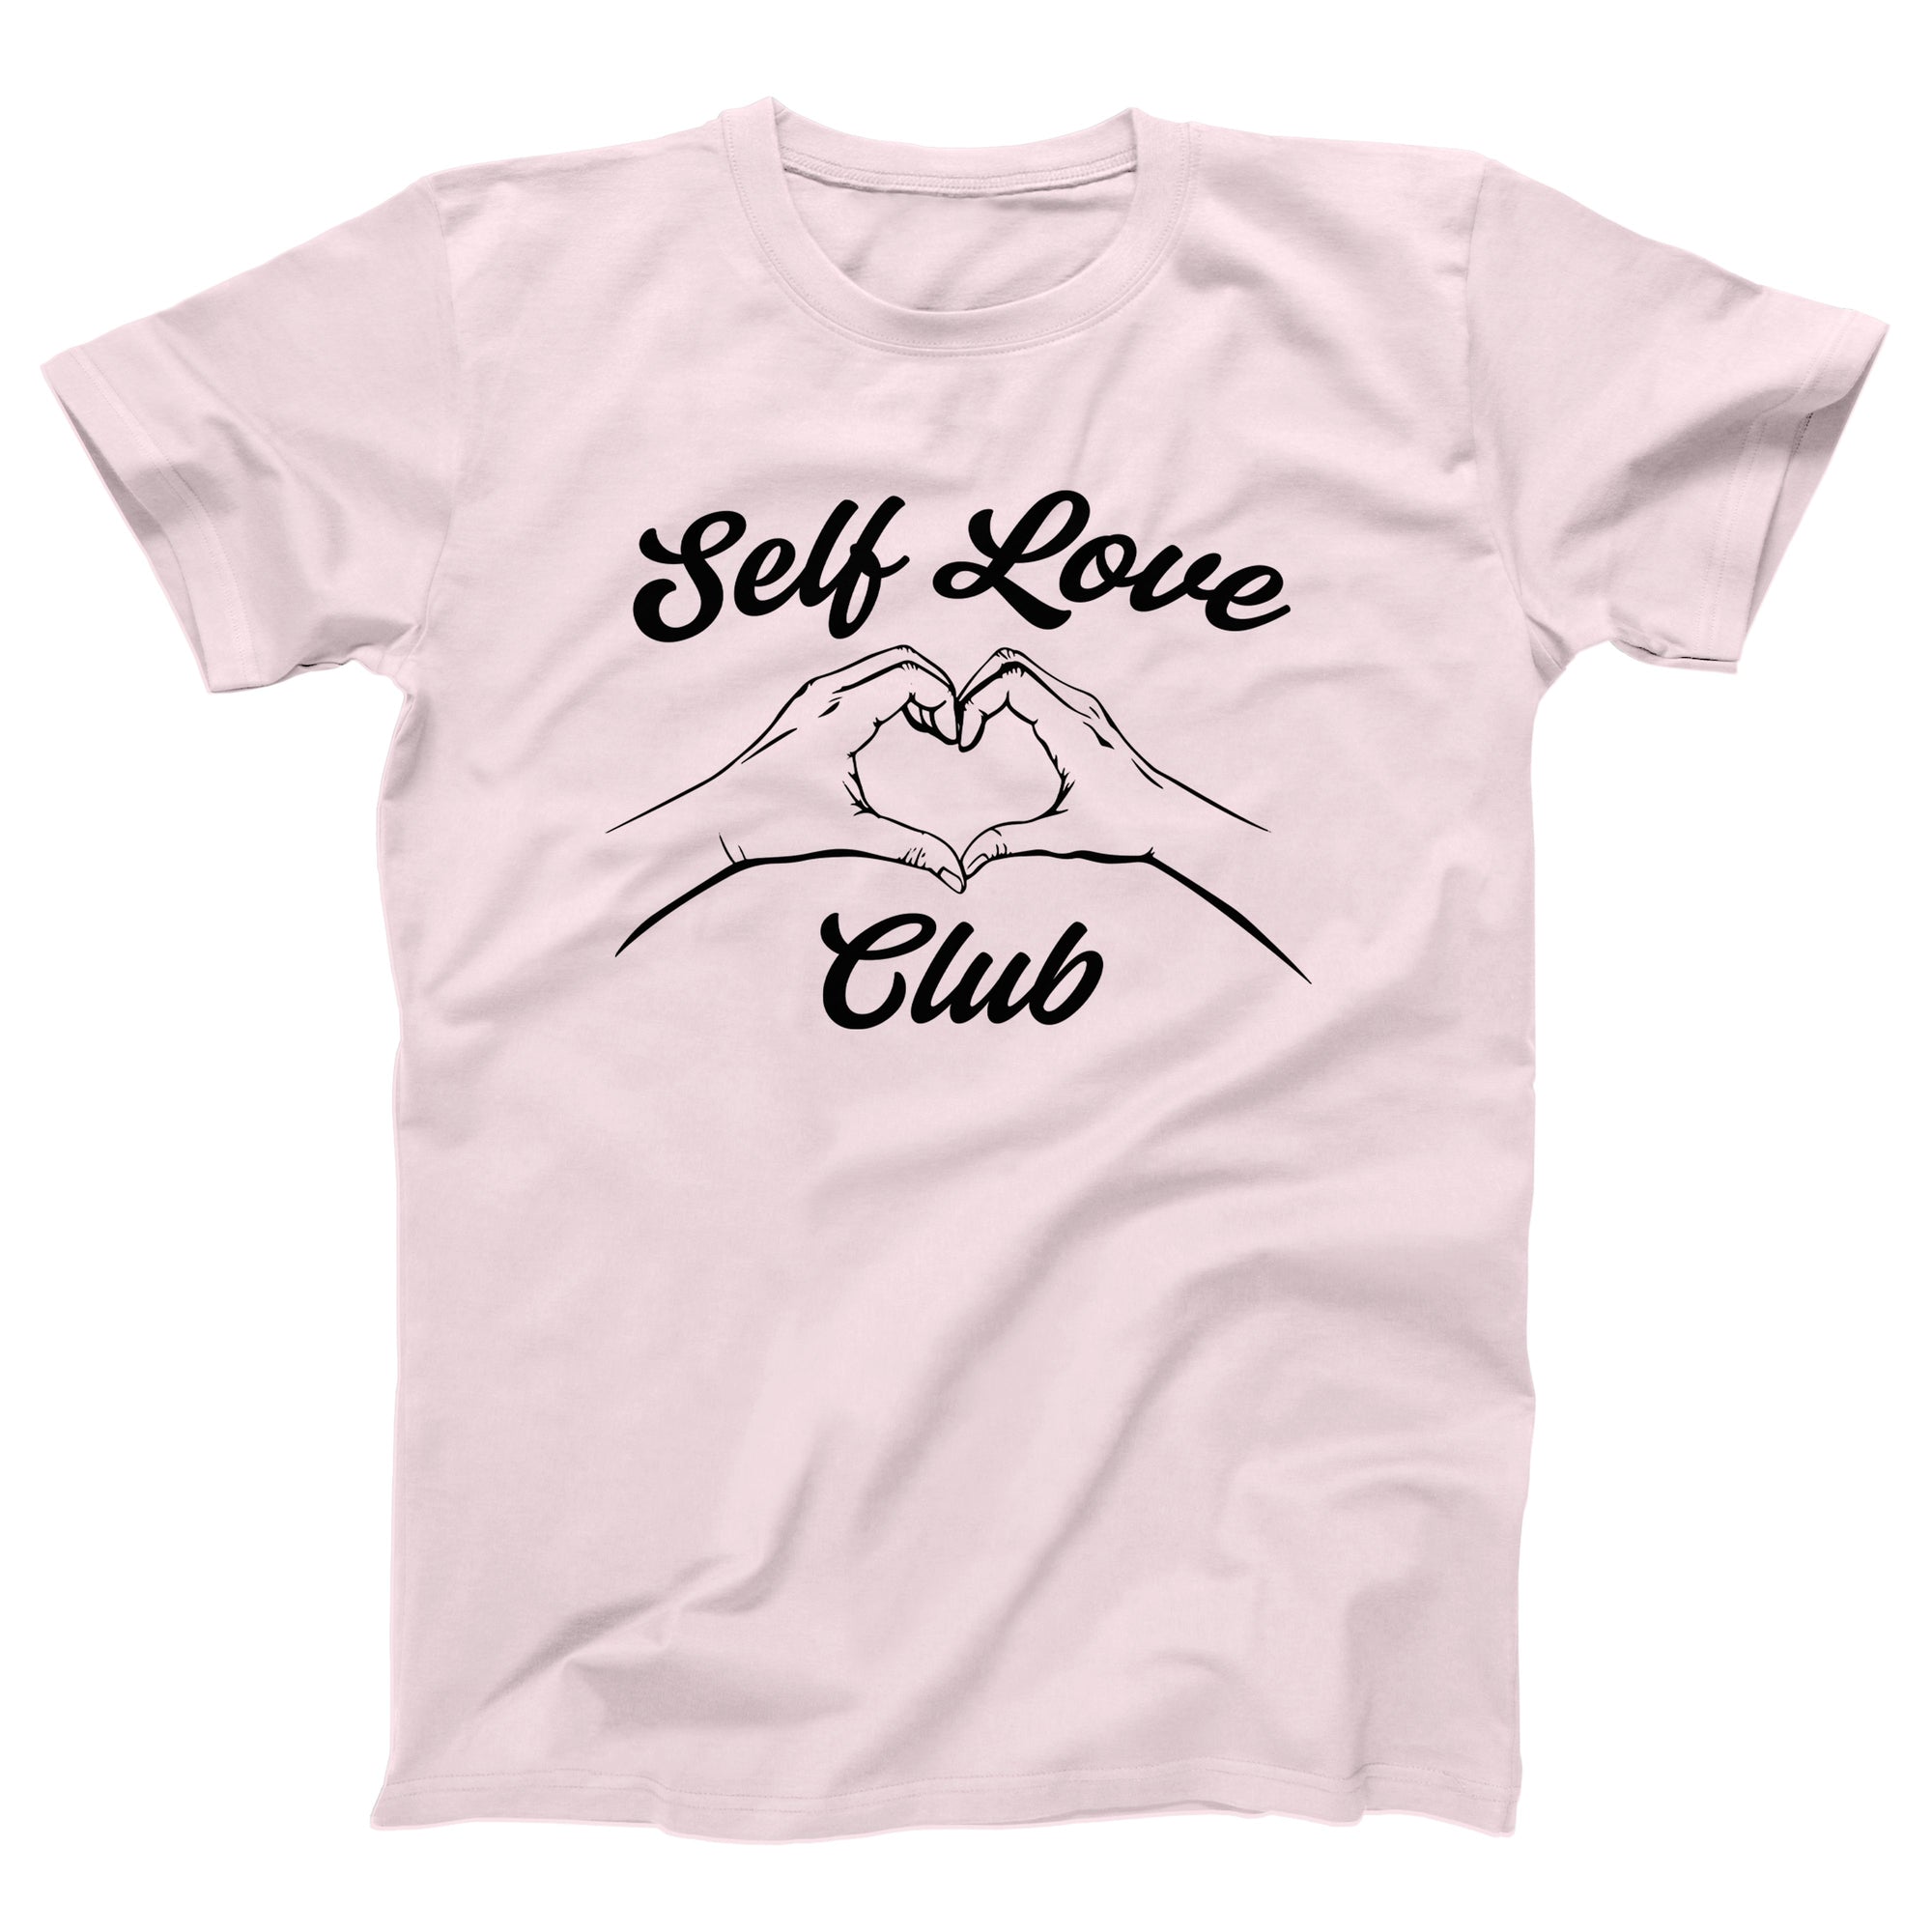 Self Love Club Adult Unisex T-Shirt - anishphilip